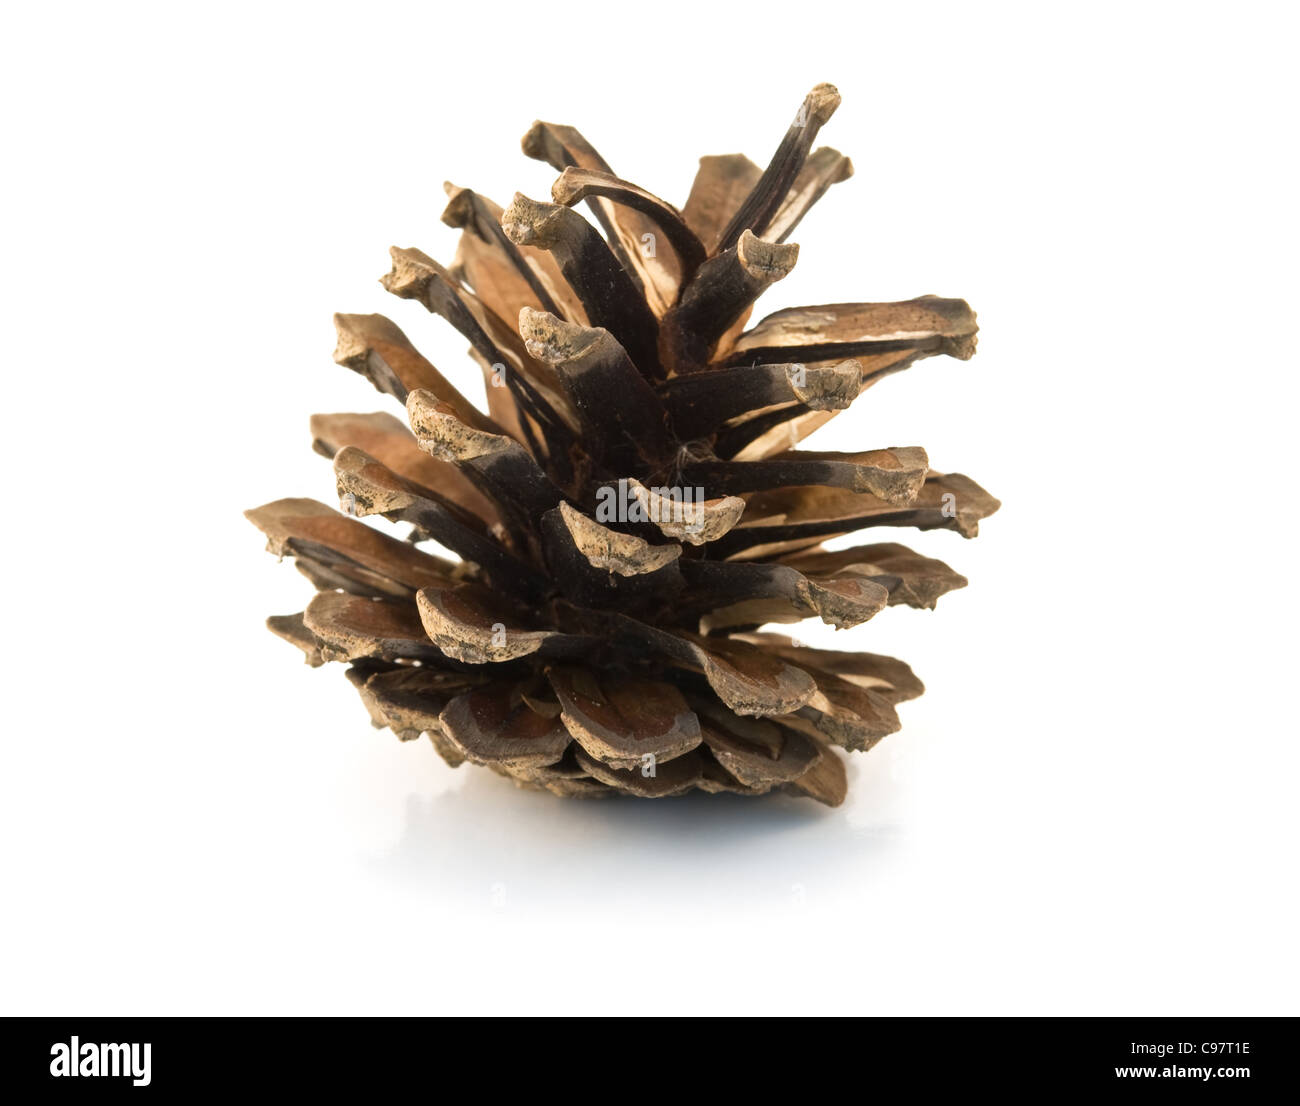 pine cone and needles Stock Photo